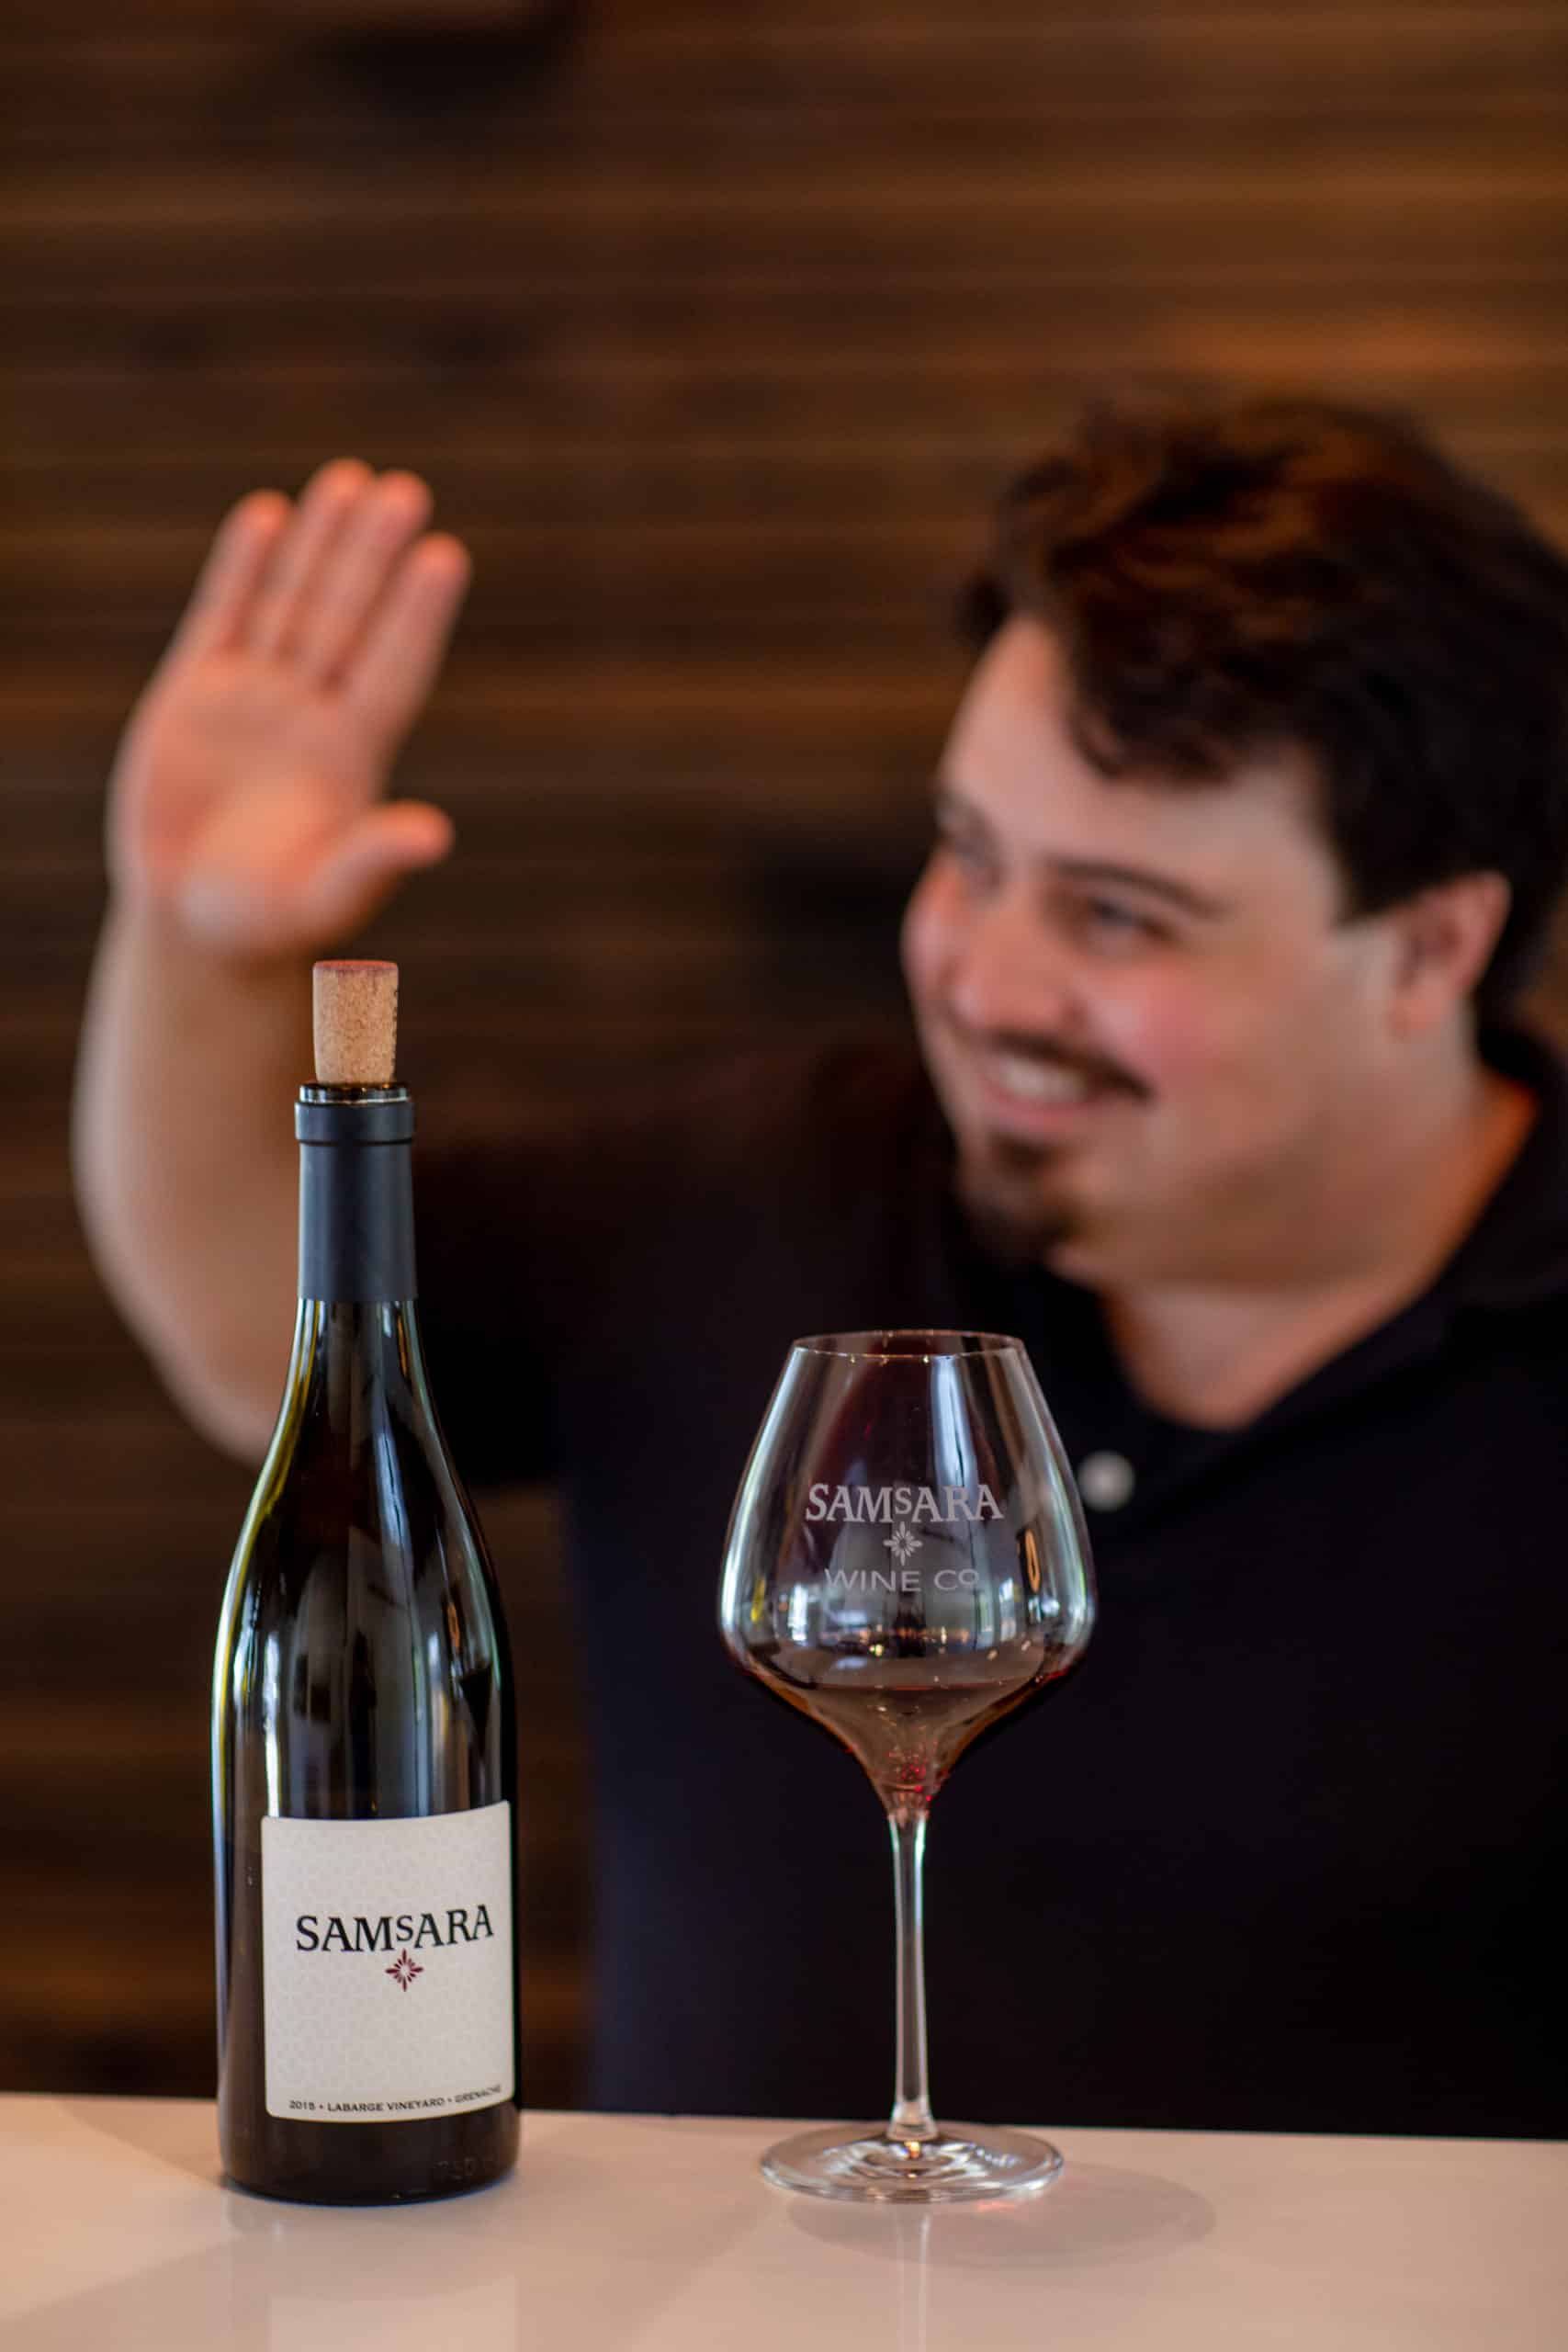 Devon serving wine at SAMsARA Wine's tasting room in Los Olivos, CA